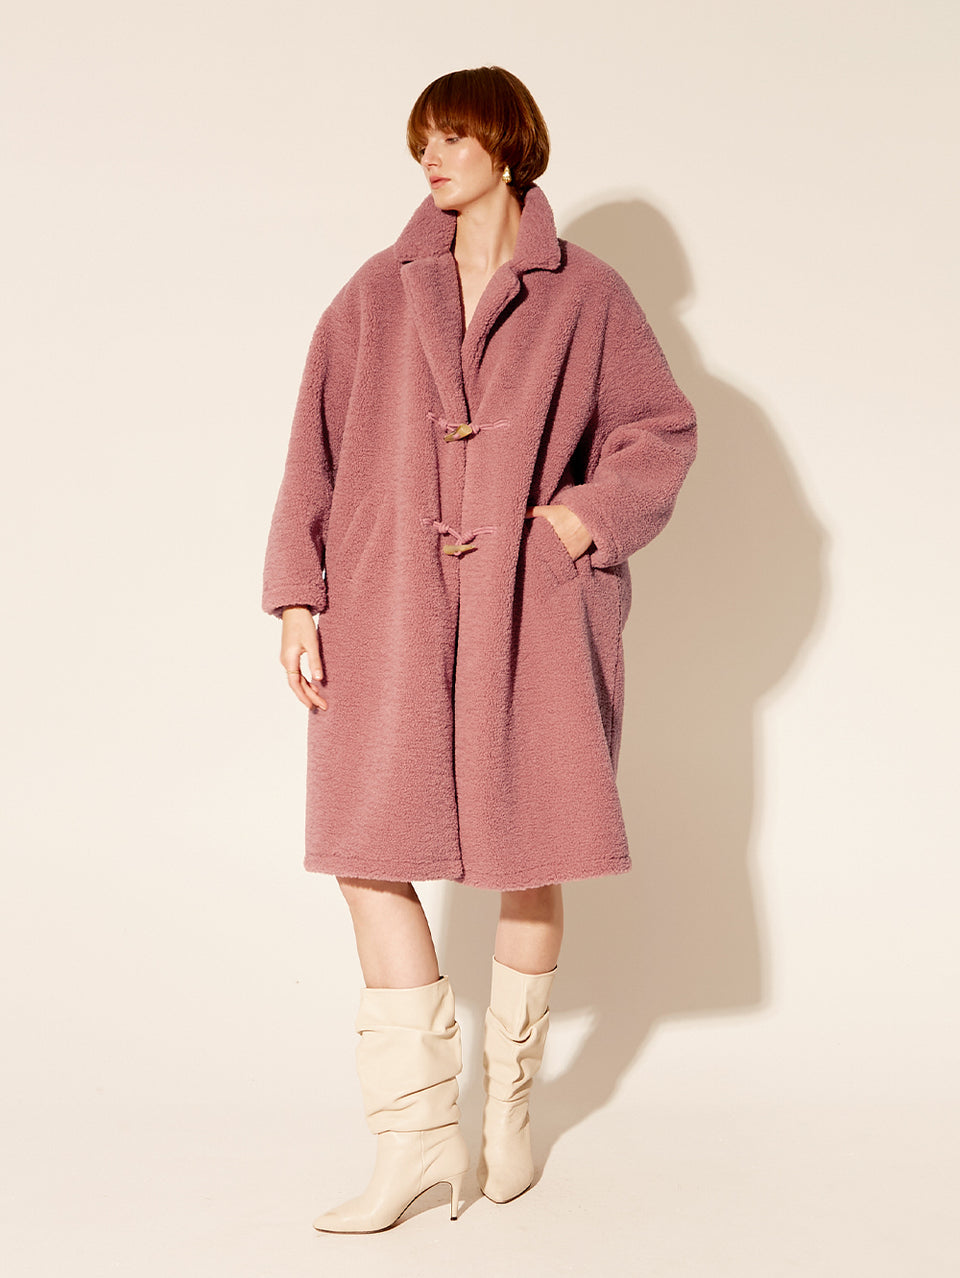 Clara Coat KIVARI | Model wears pink fluffy coat side view